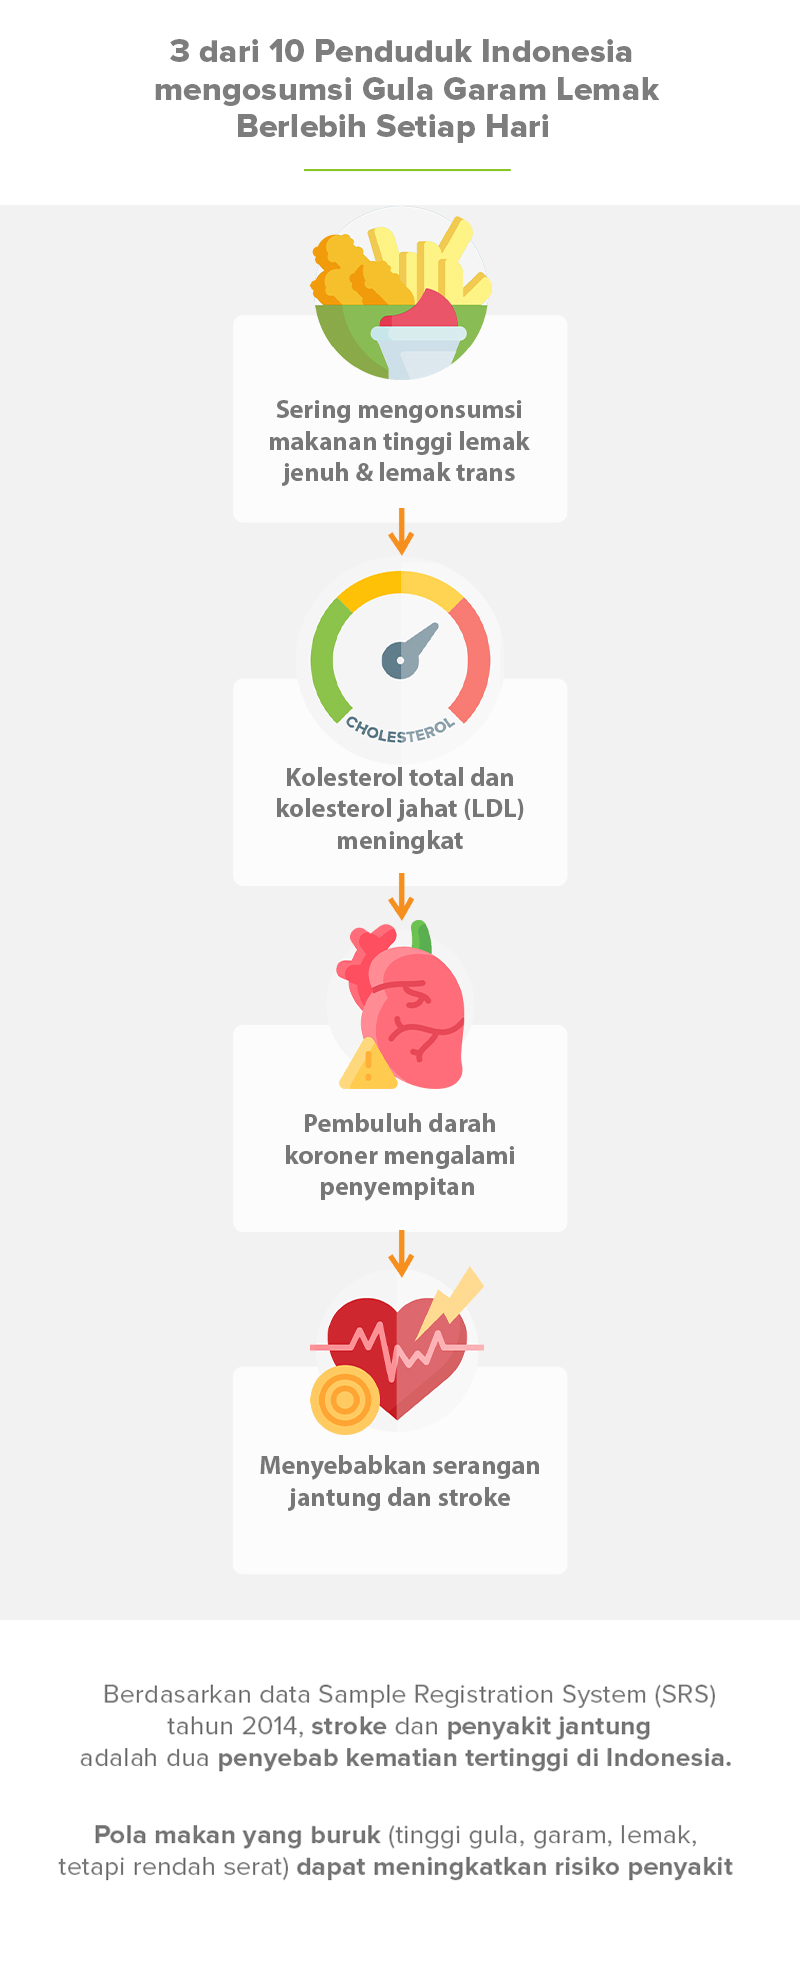 3 dari 10 penduduk indonesia mengkonsumsi gula garam lemak berlebih setiap hari